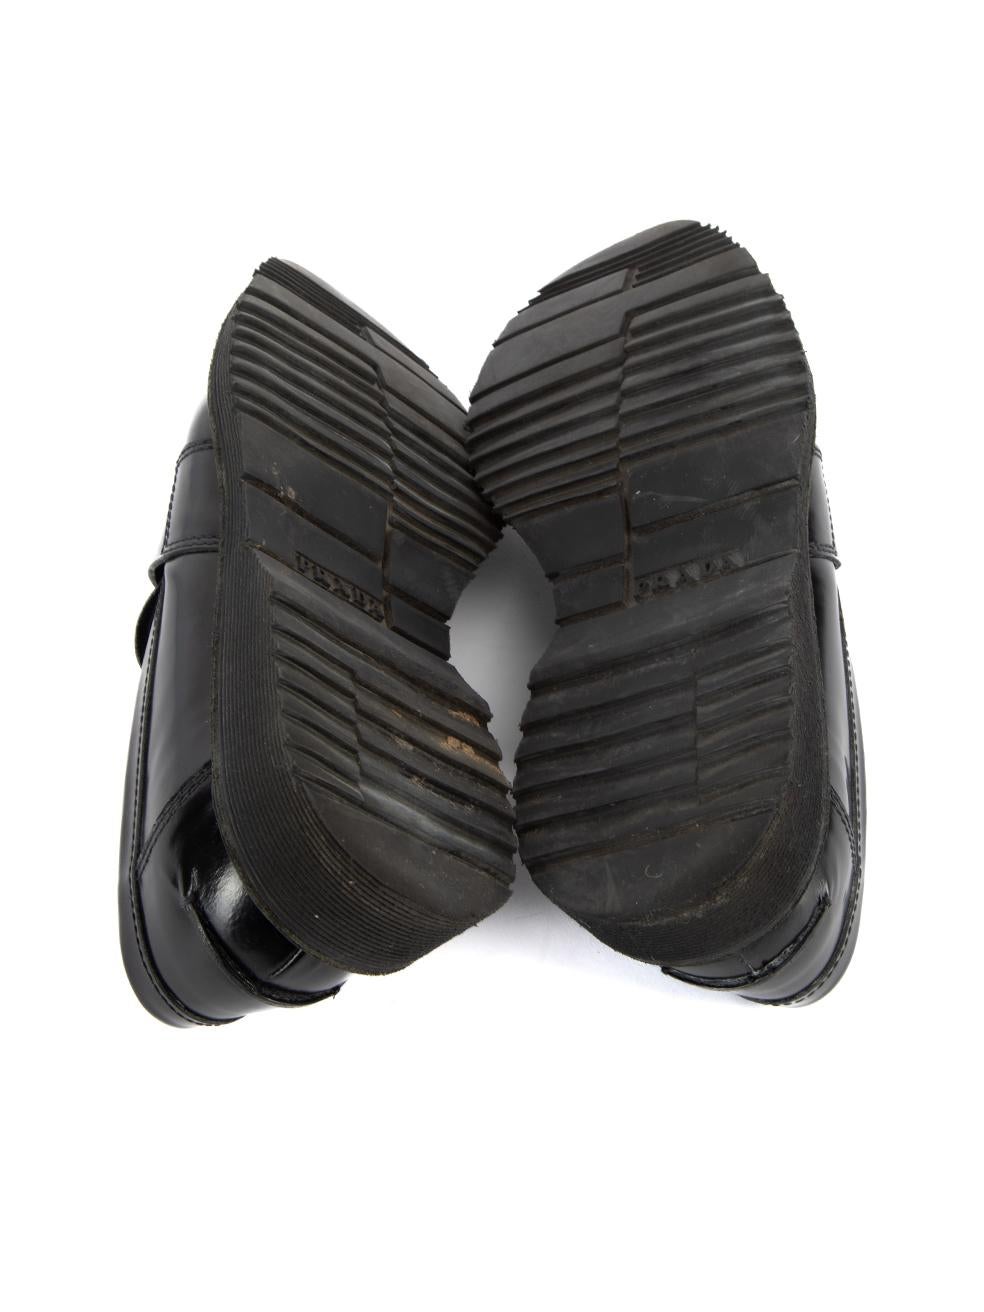 Pre-Loved Prada Women's Black Leather Dress Shoes 1